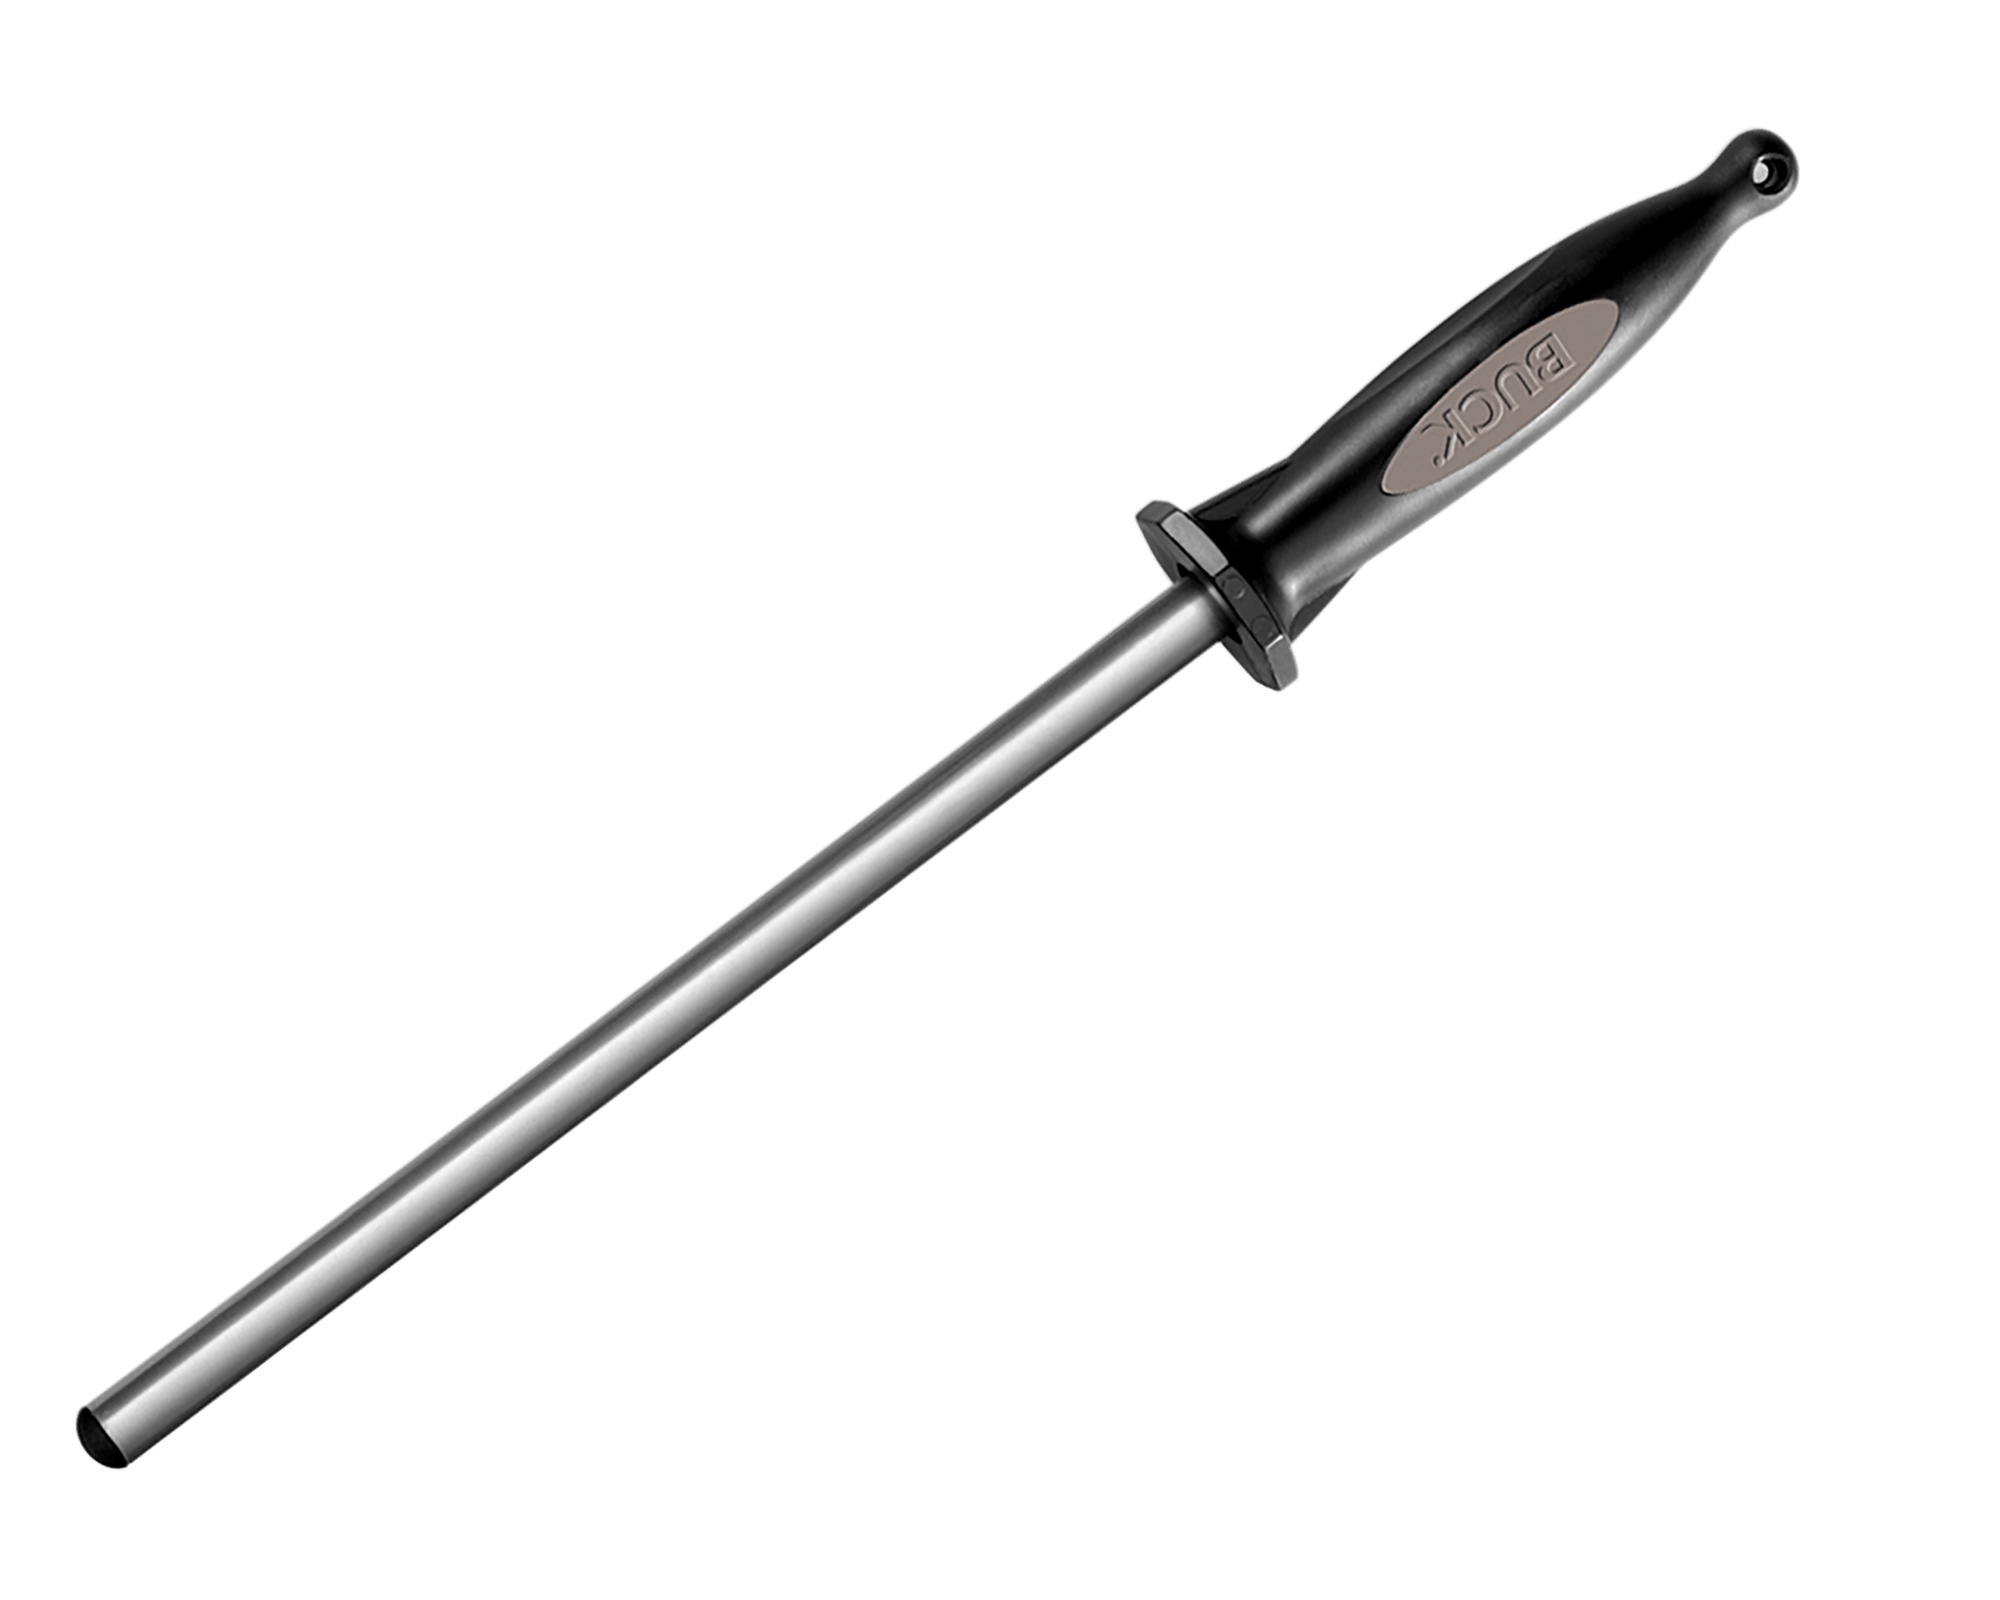 Pocket Knife Sharpener, Tungsten Steel Portable Knife Sharpening